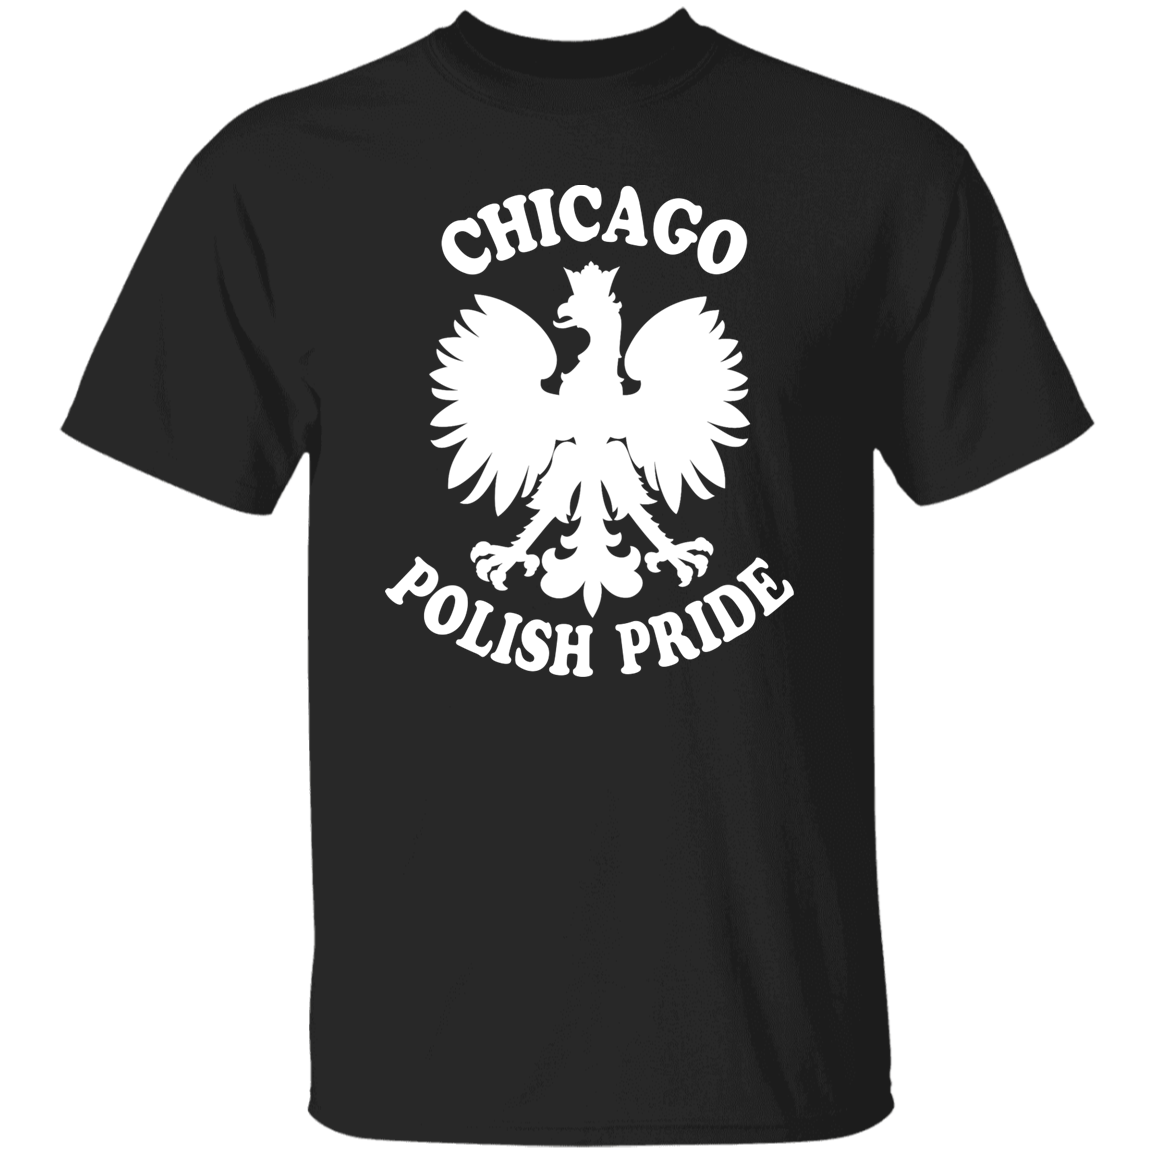 Chicago Polish Pride Apparel CustomCat G500 5.3 oz. T-Shirt Black S